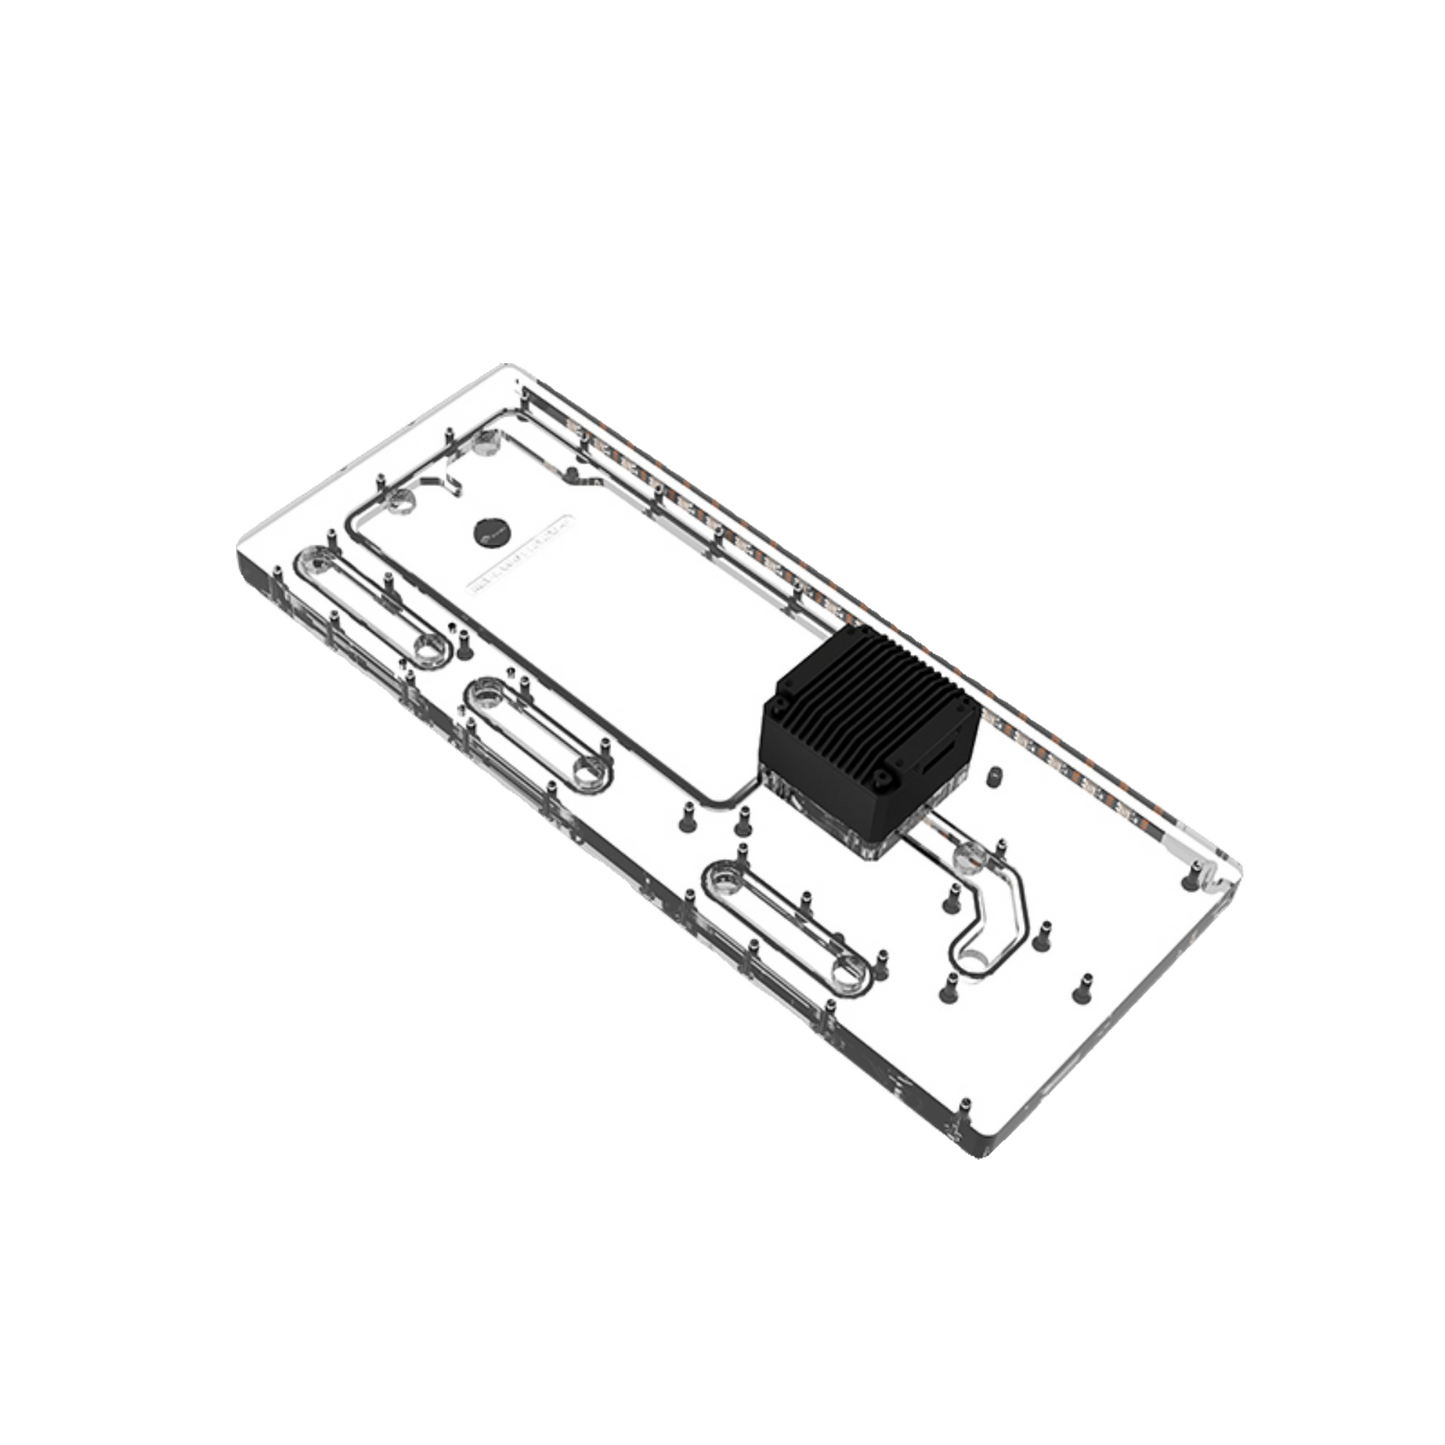 Bykski Distro Plate For Lian Li O11 EVO XL Case, 5V A-RGB Acrylic Waterway Board, Complete Kit For Water Cooling Loop, RGV-LAN-O11EVOXL-P